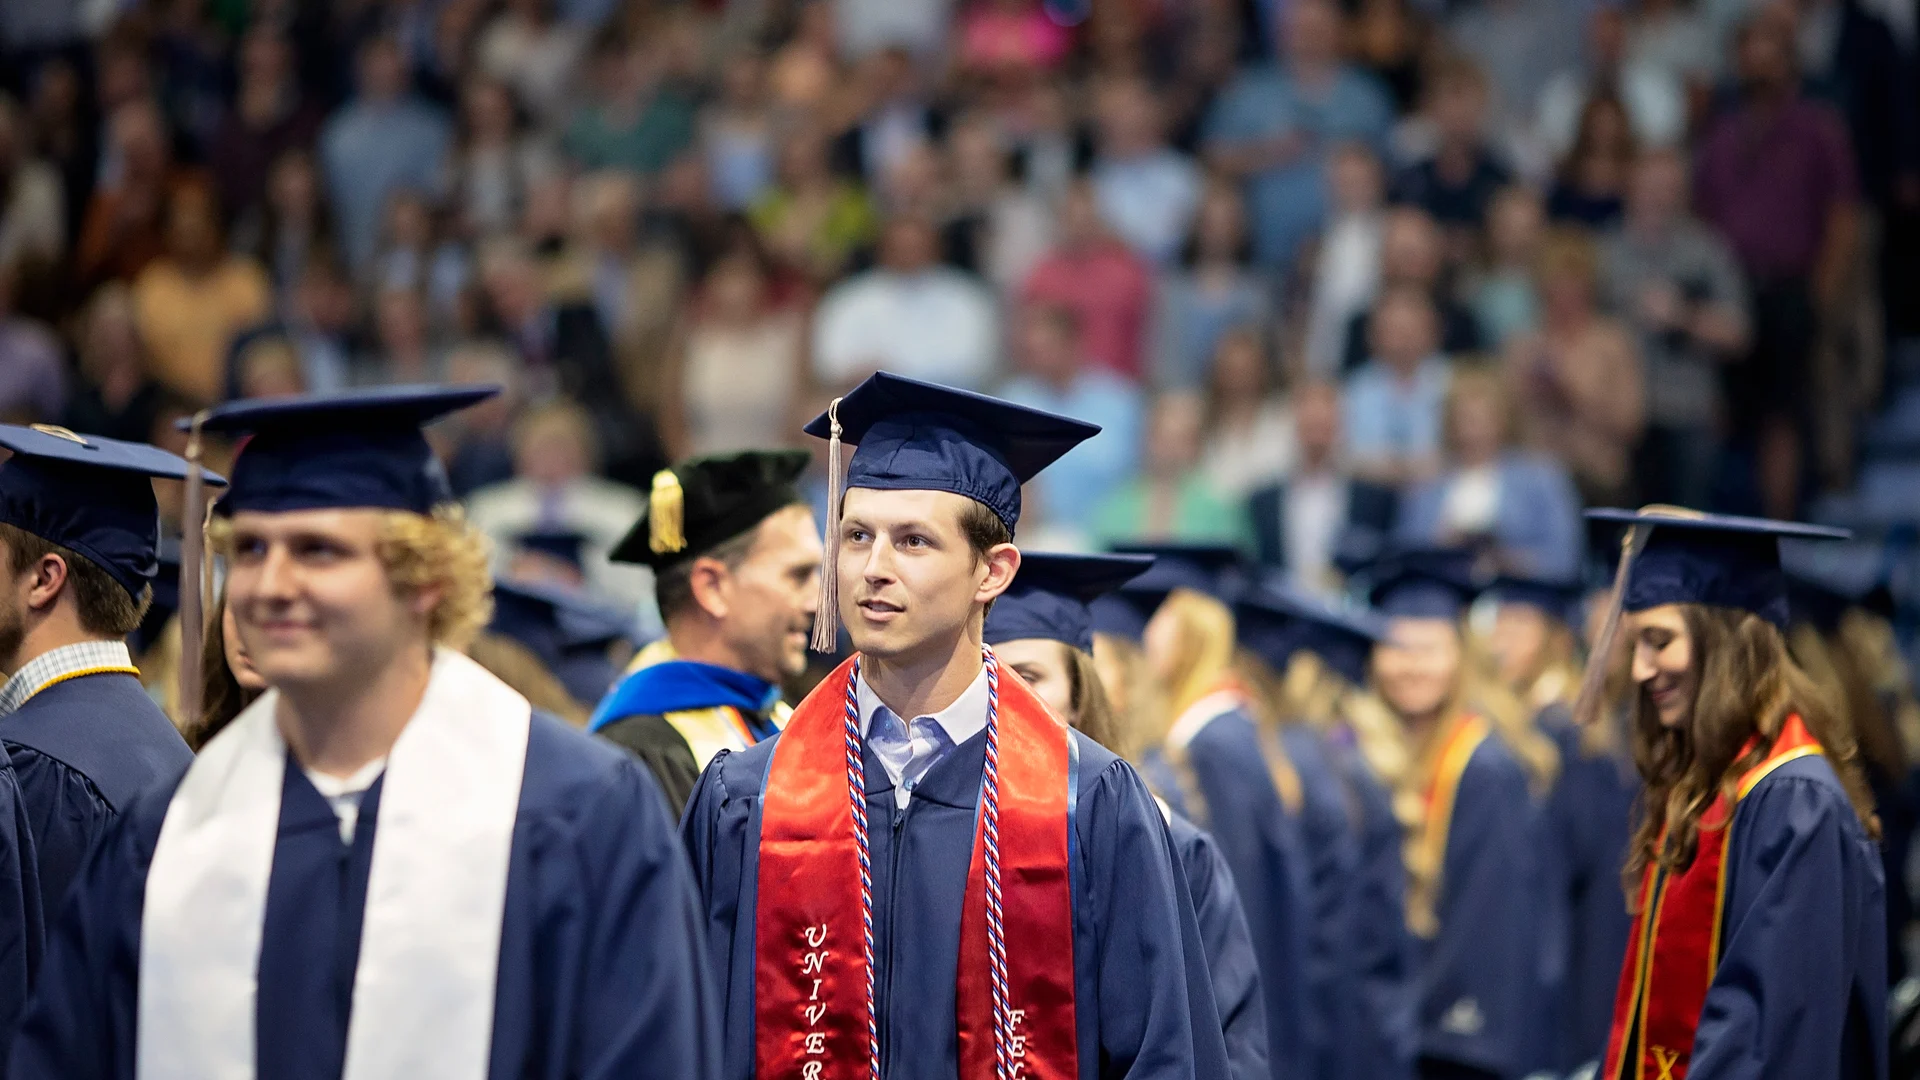 Business Students At Graduation Walking Up